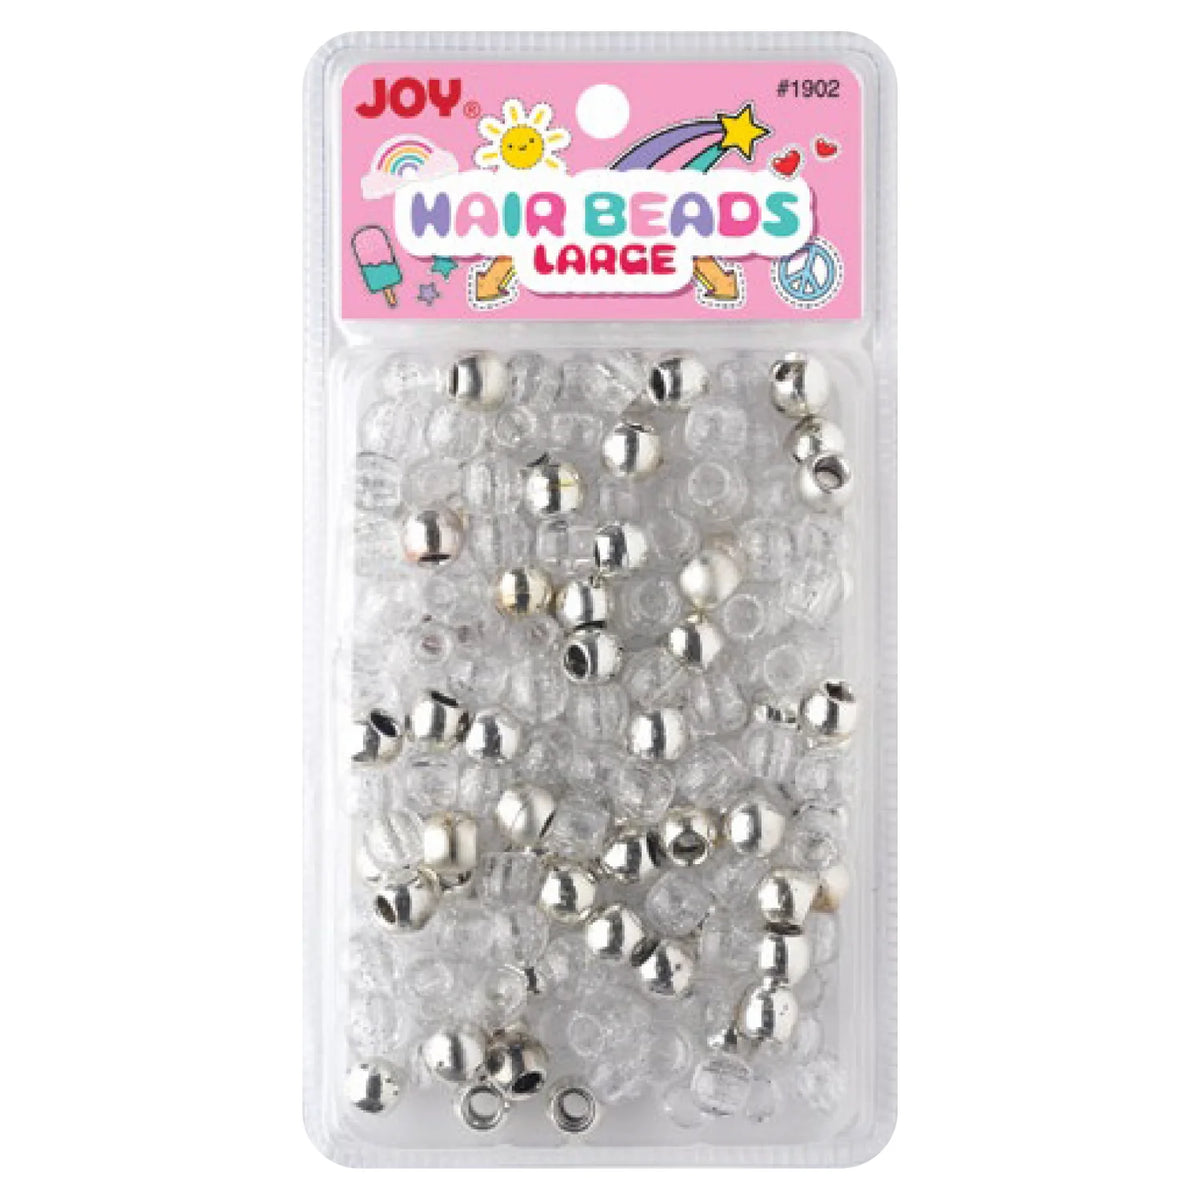 Joy Large Hair Beads 240ct Gold Metallic & Glitter – Annie